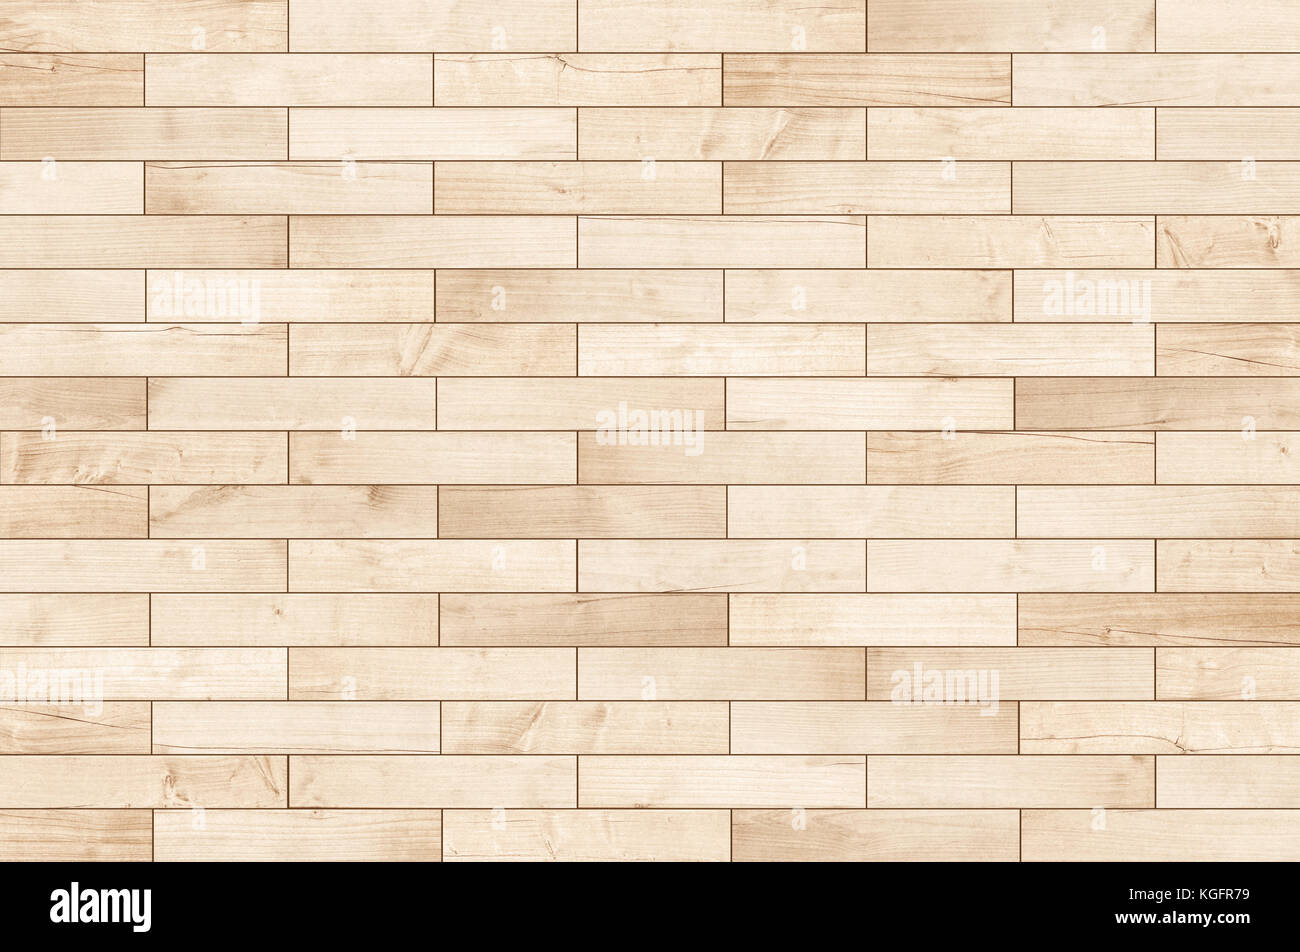 Natural brown wooden parquet floor. Wood texture. Stock Photo